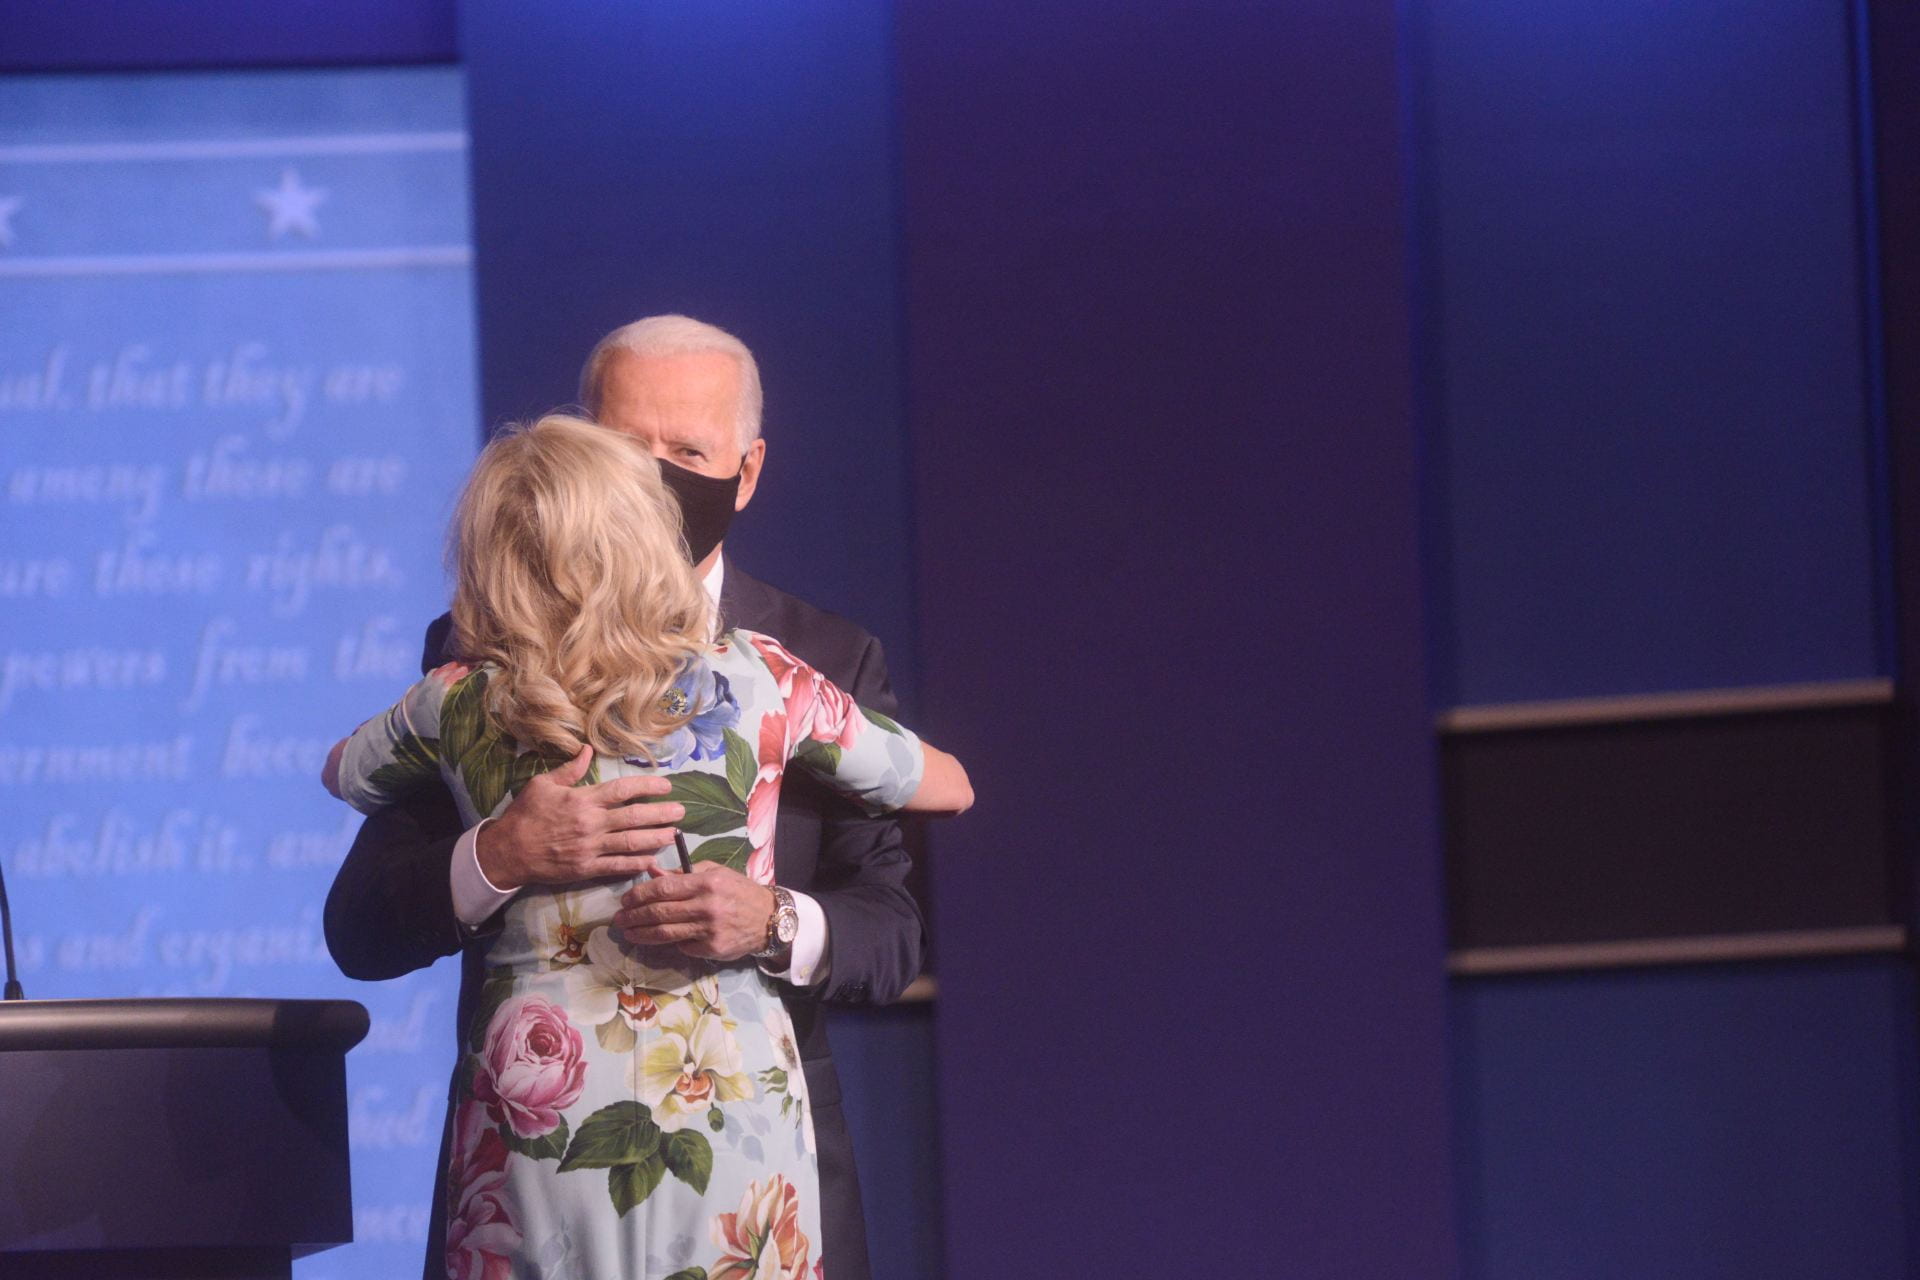 President Biden embracing his Wife at the debate.